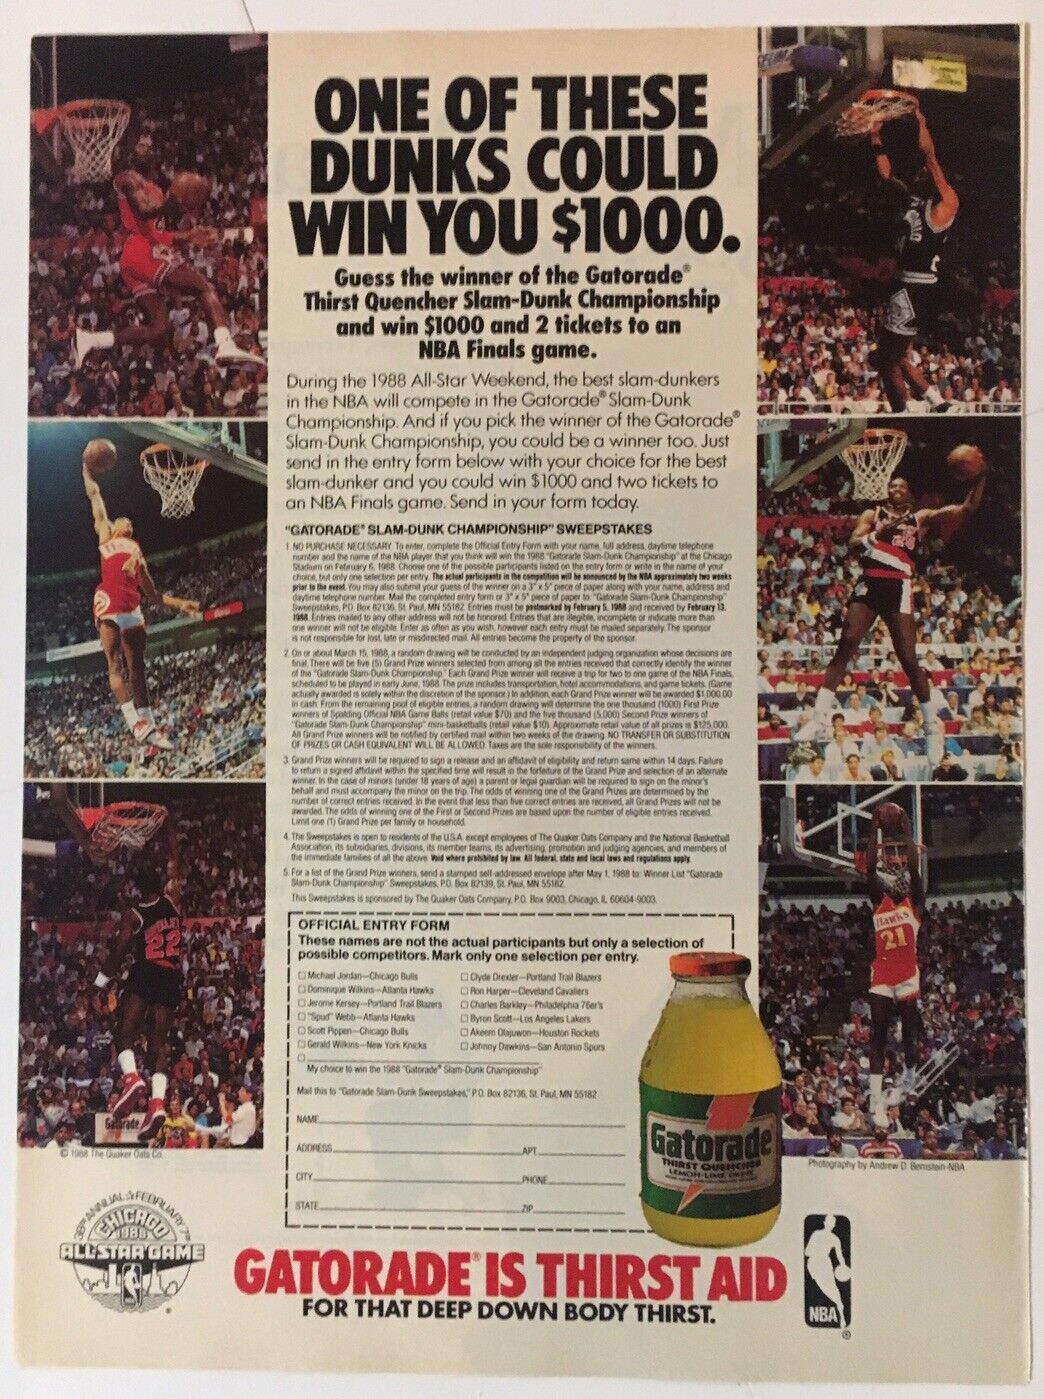 Gatorade Slam Dunk Michael Jordan Spud Webb 1988 Vintage Print Ad 8x11 Inches